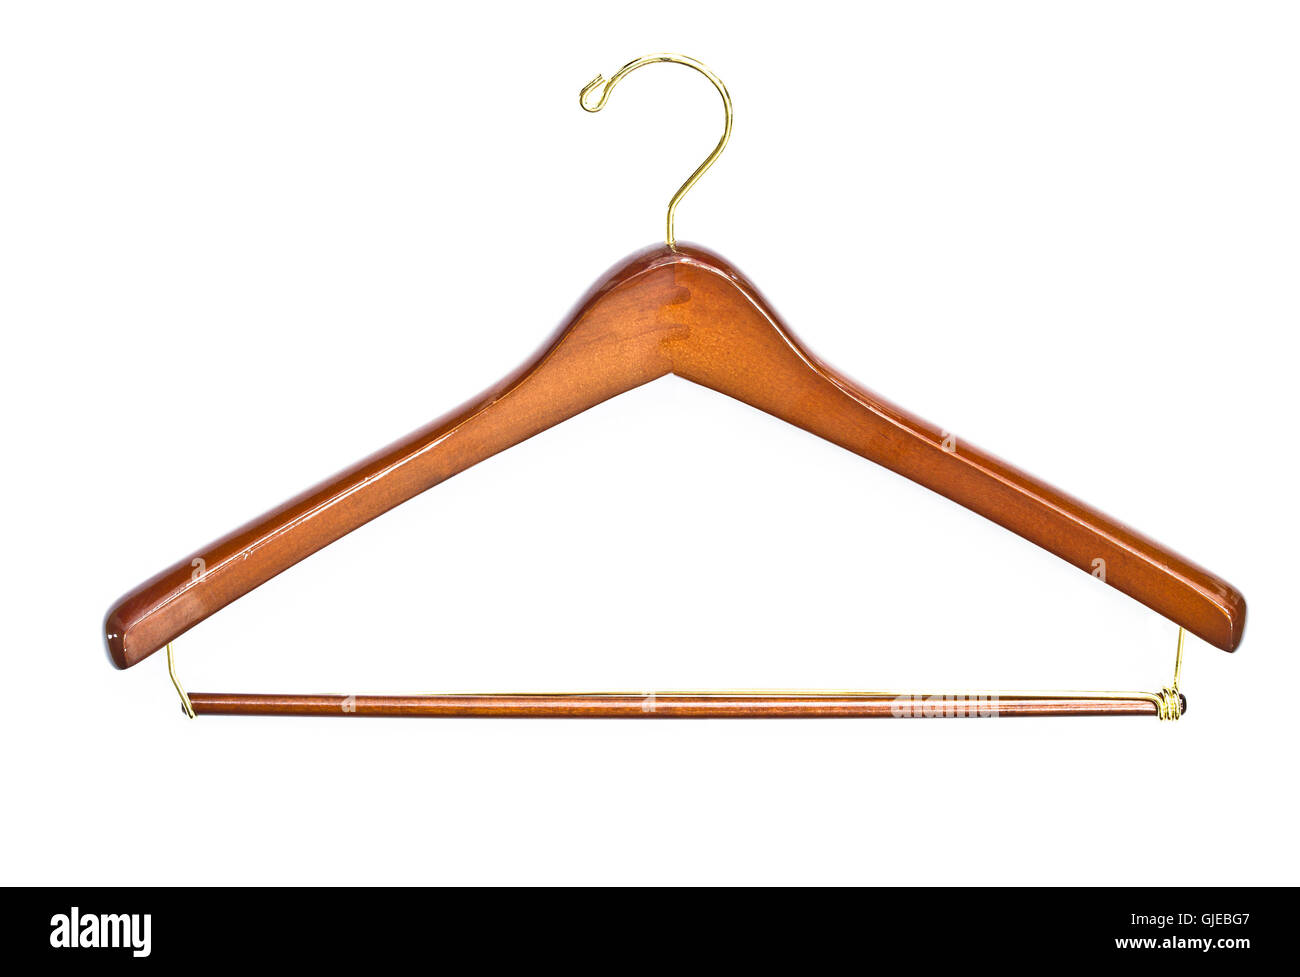 Single wooden varnished quality coat hanger on a plain white background Stock Photo